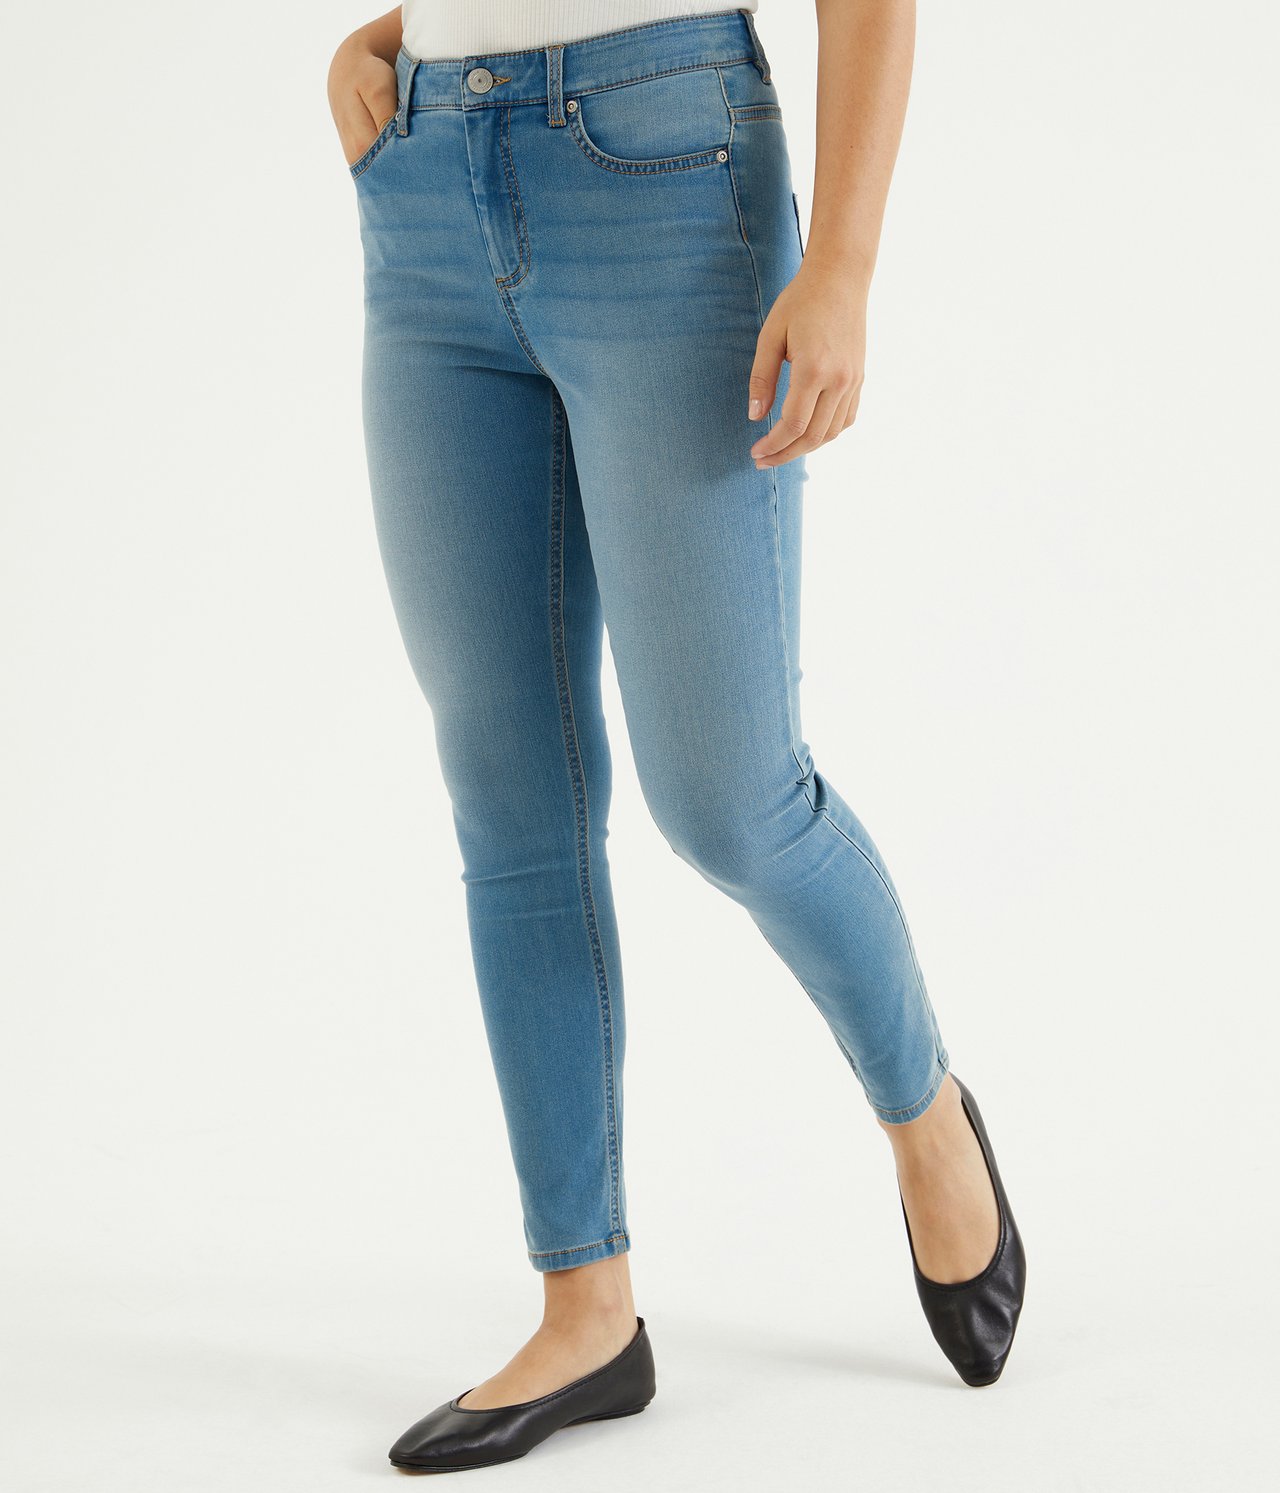 Super slim jeans short leg - Denimi - 2